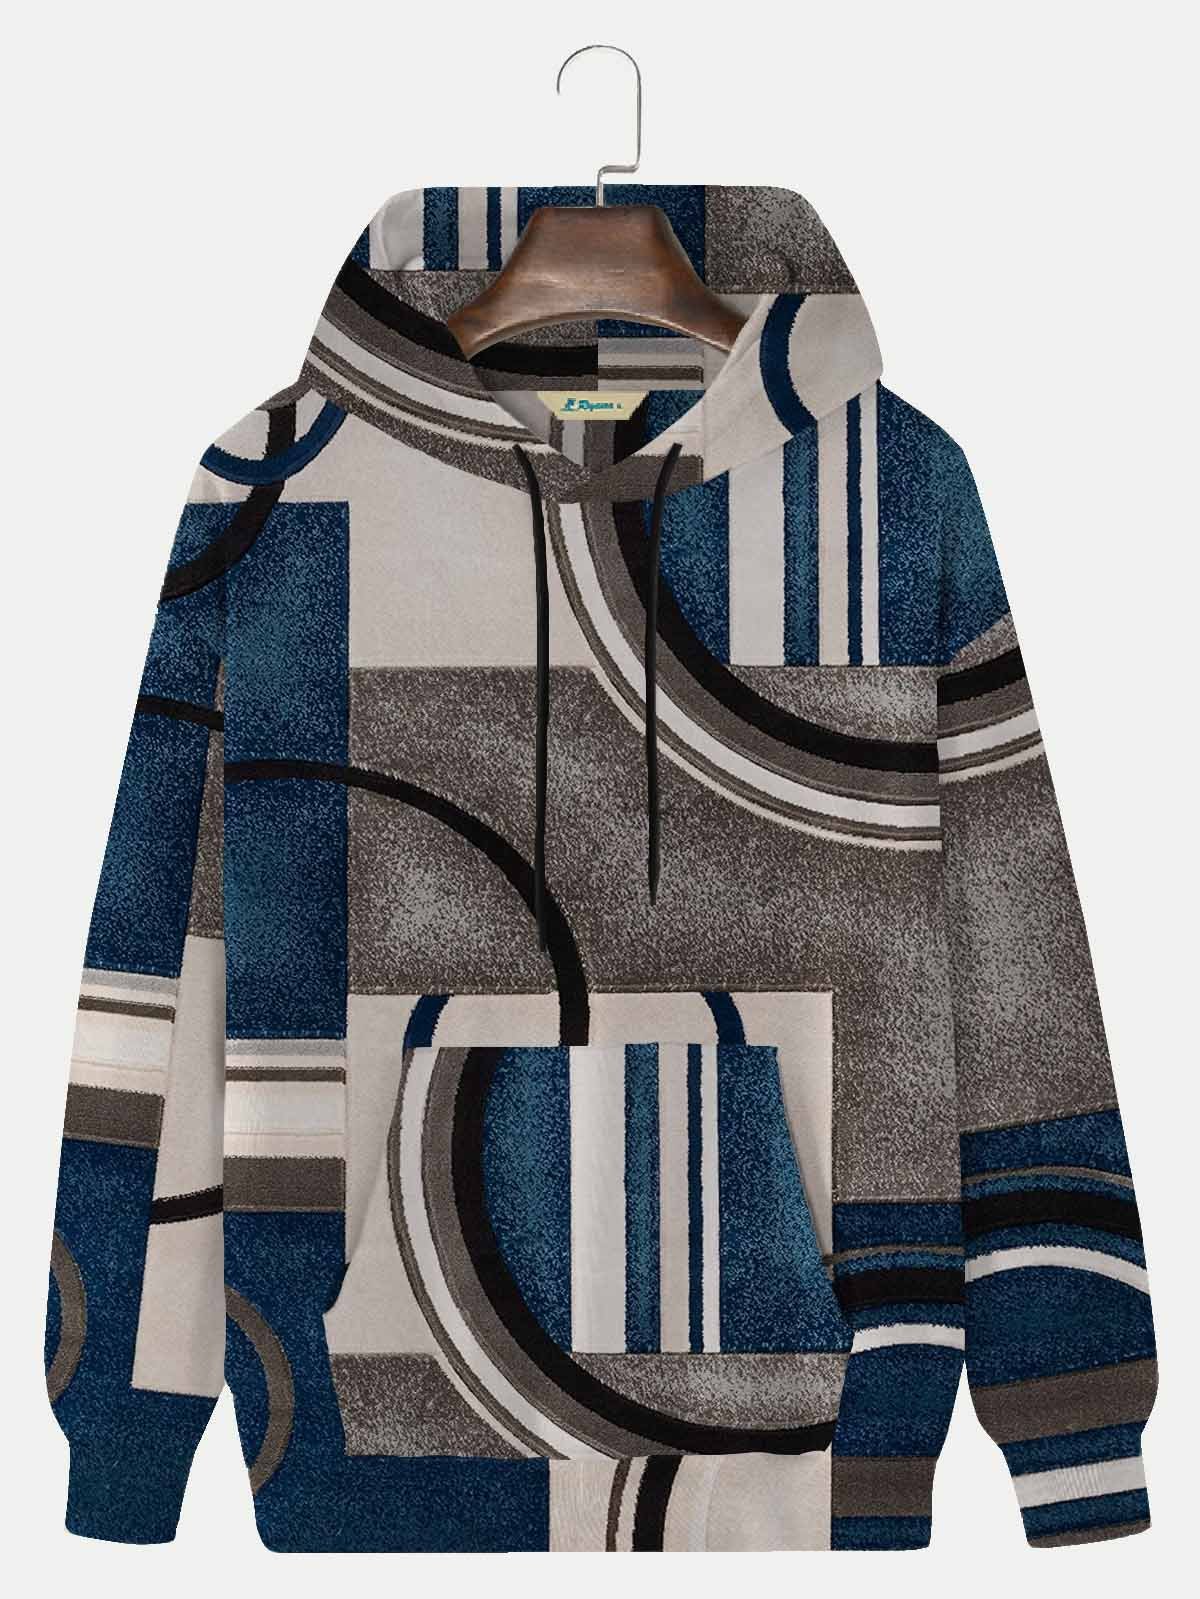 Royaura Men's Vintage Hoodies Geometric Art Comfortable Blend Plus Size Sweatshirt